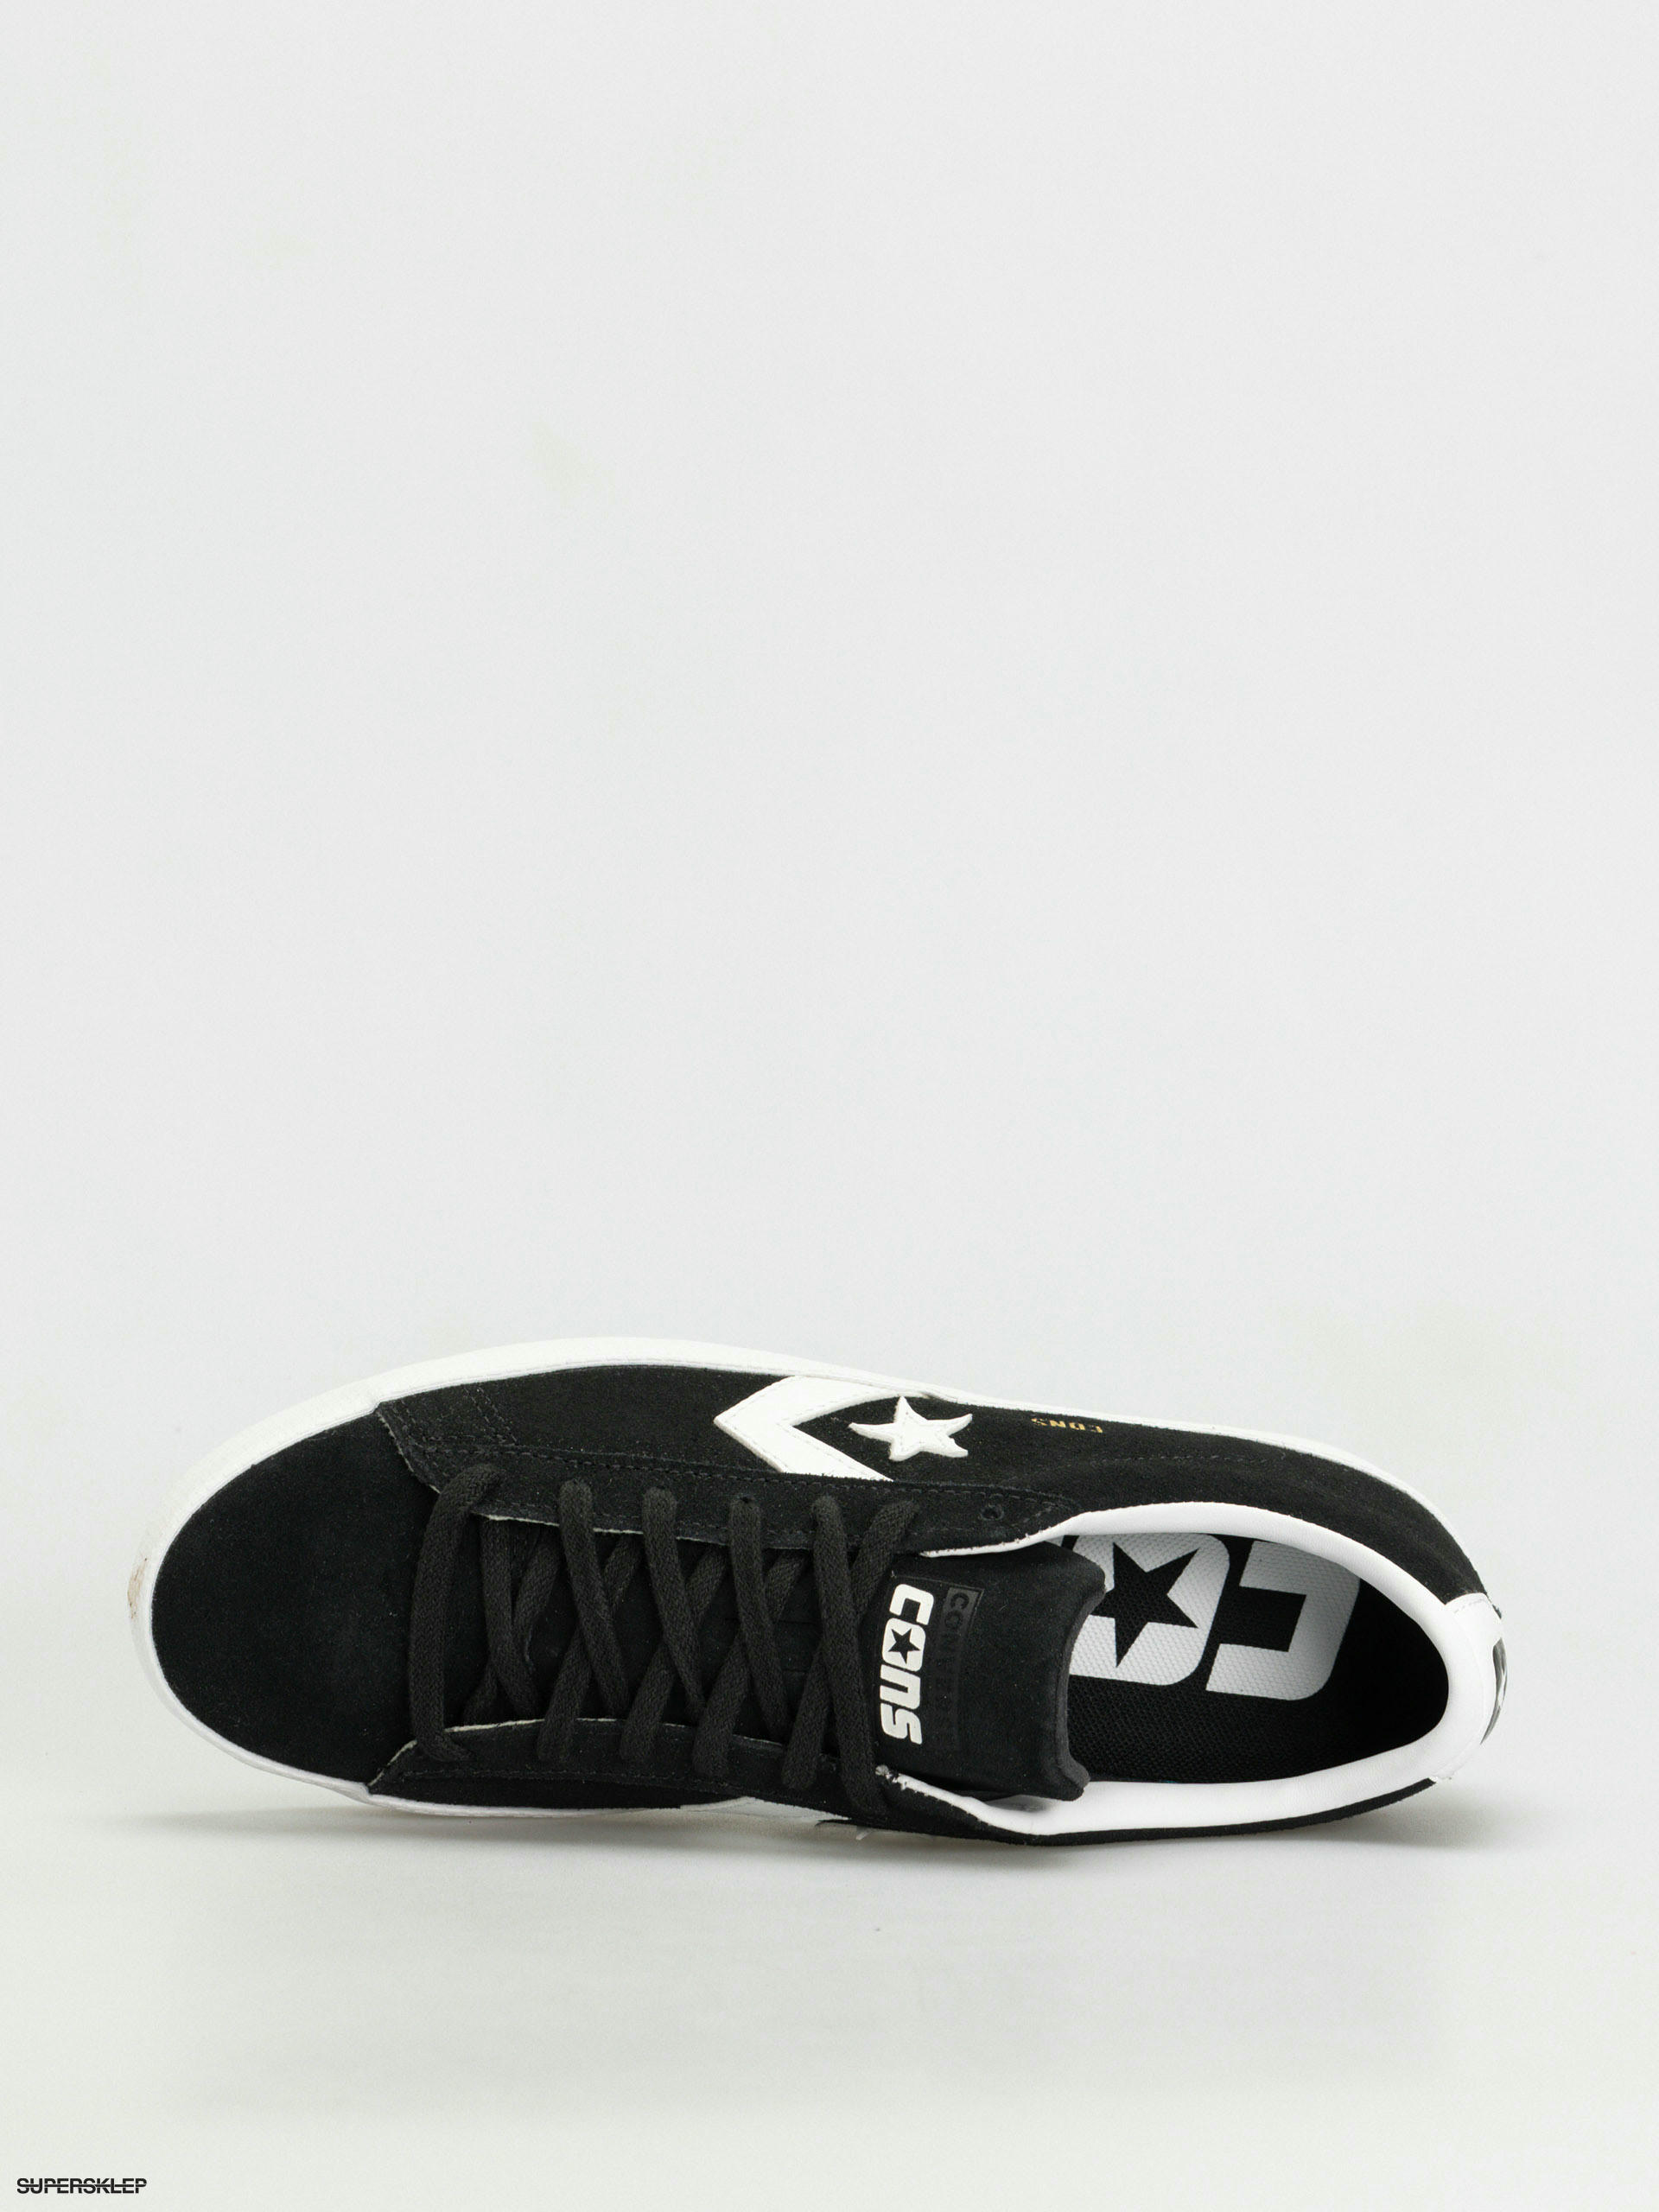 Converse Pro Leather Vulc (black/white)